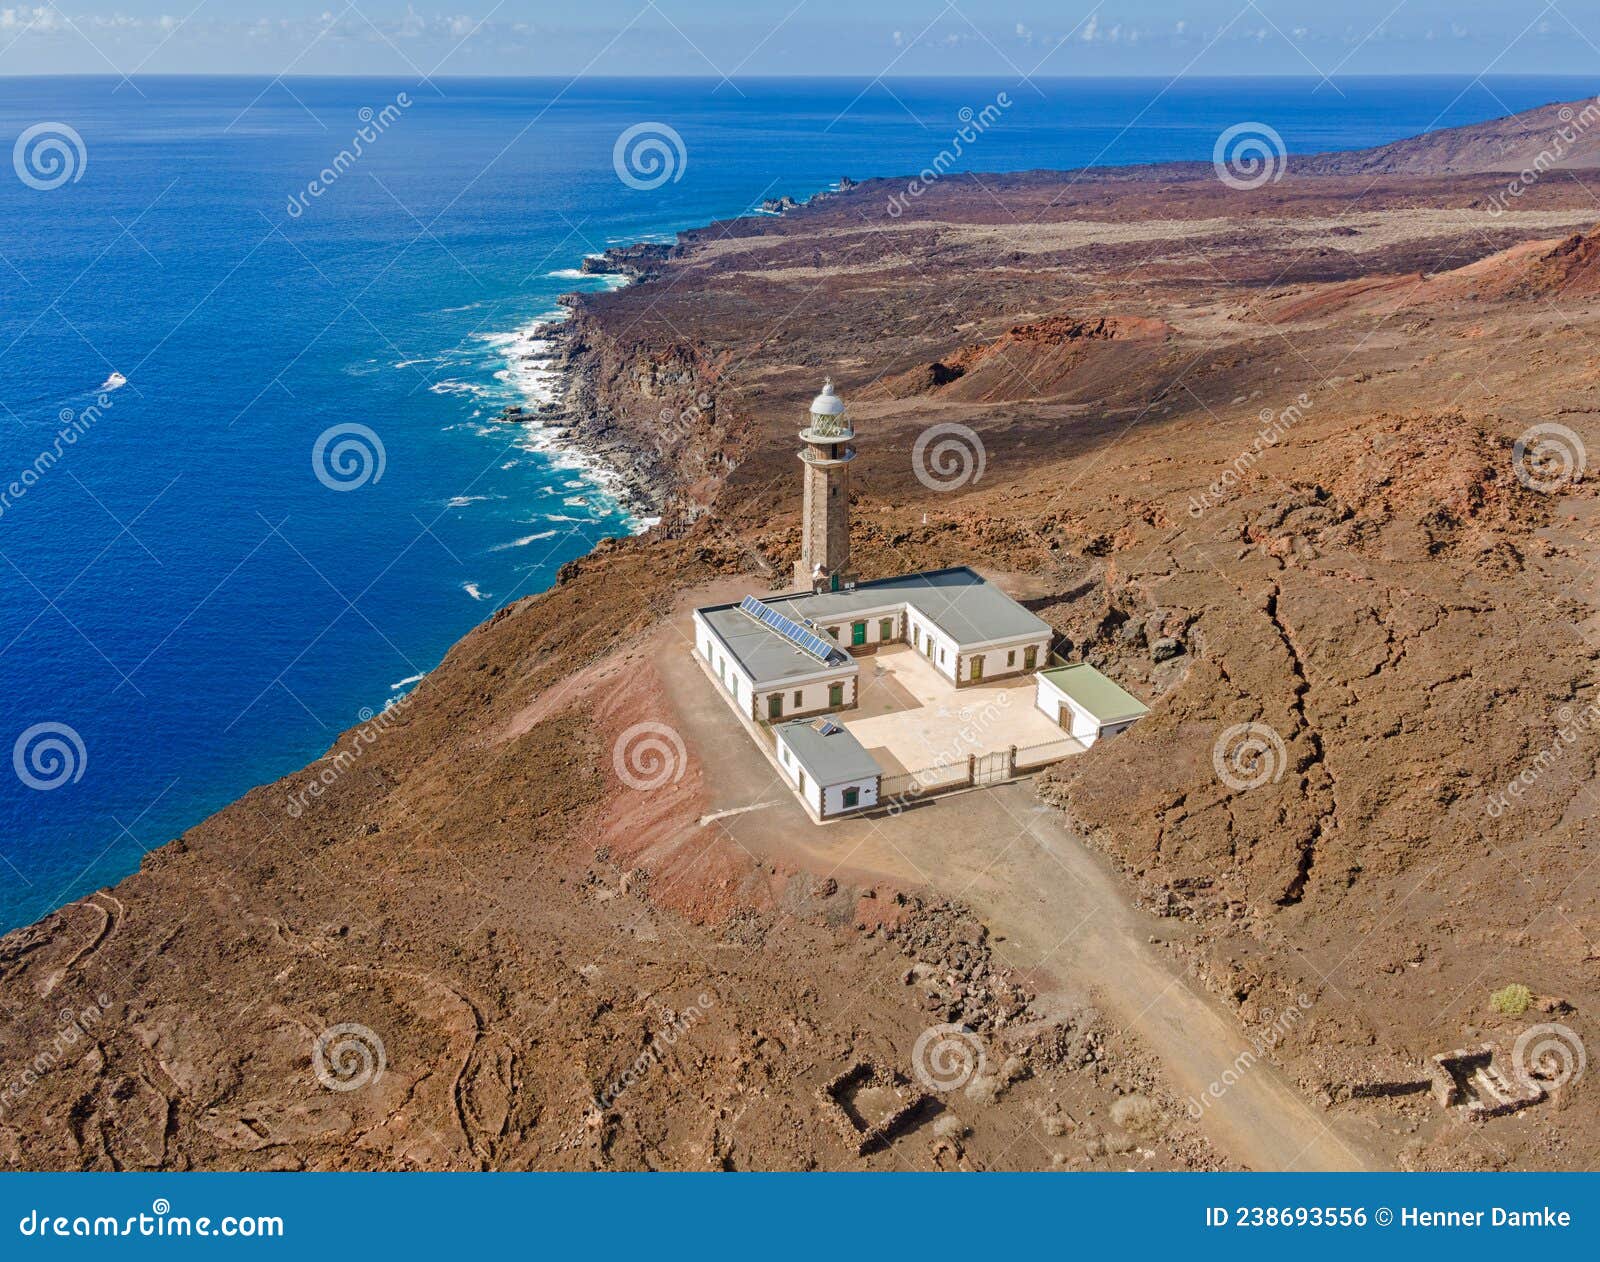 lighthouse faro de orchilla - southwest coast of el hierro canary islands